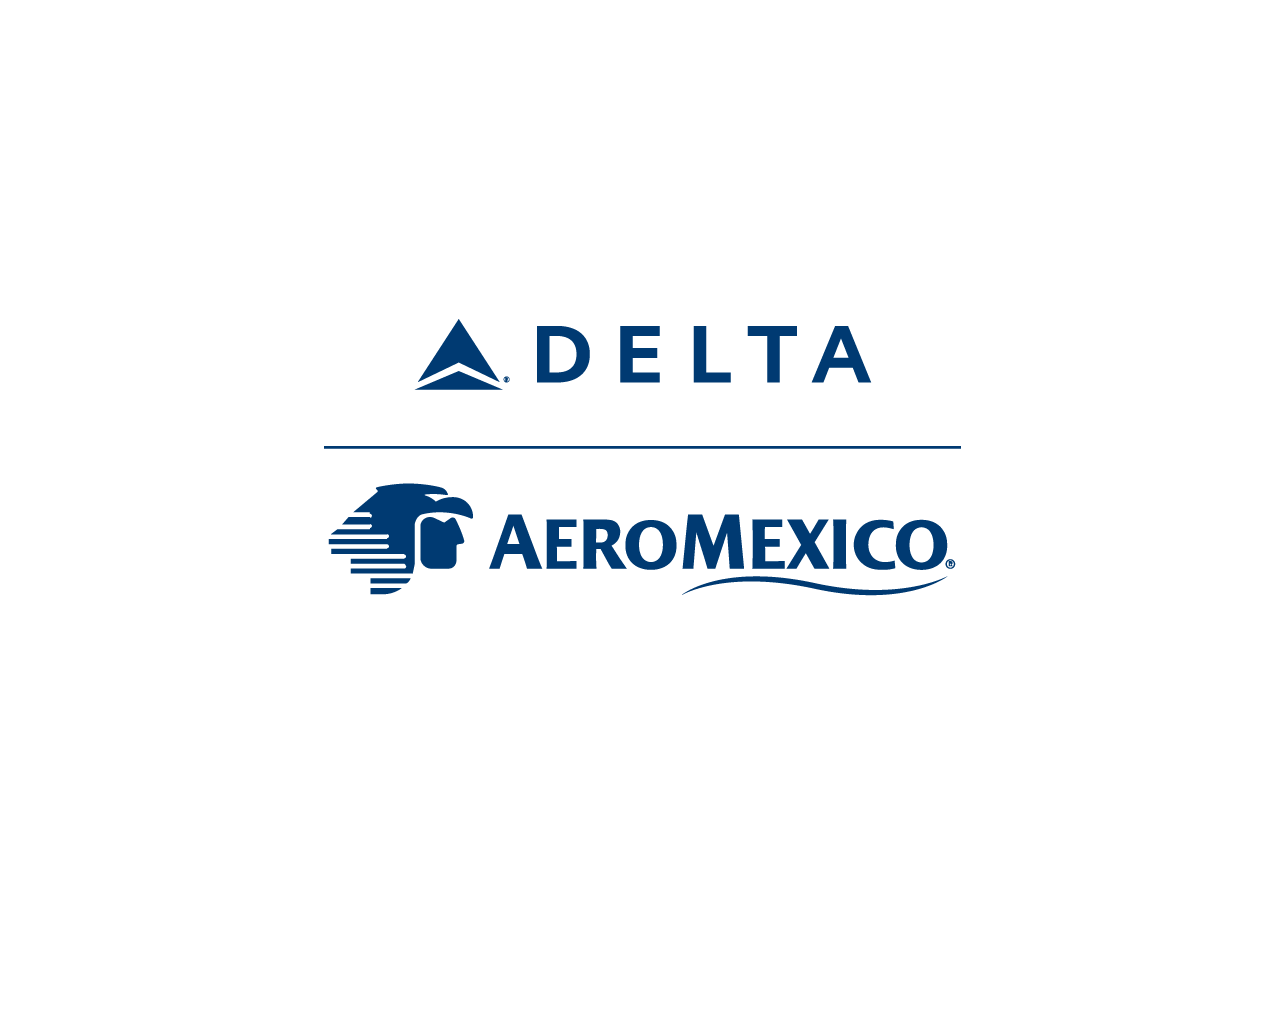 Aeromexico Logo - Delta Aeromexico Logo Mexico Film Festival